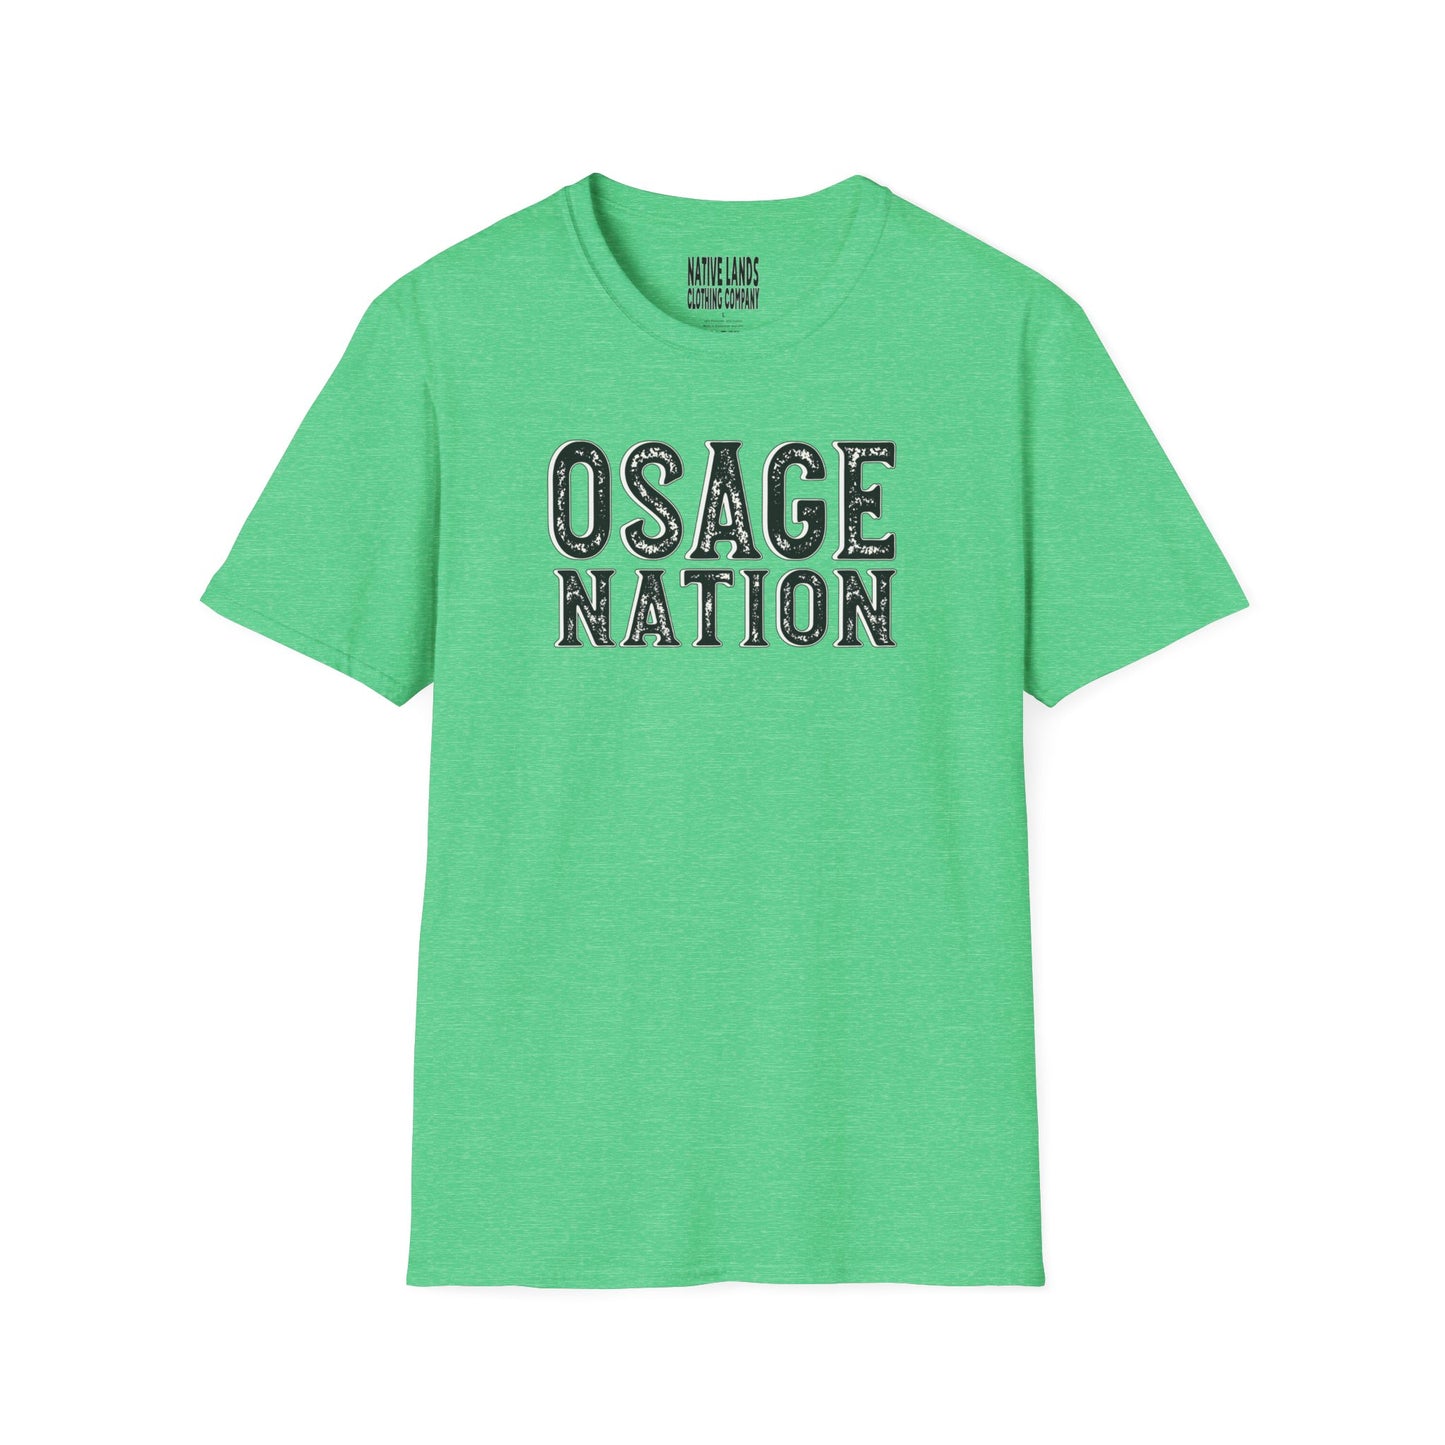 Osage Nation Shirt Cotton Native American